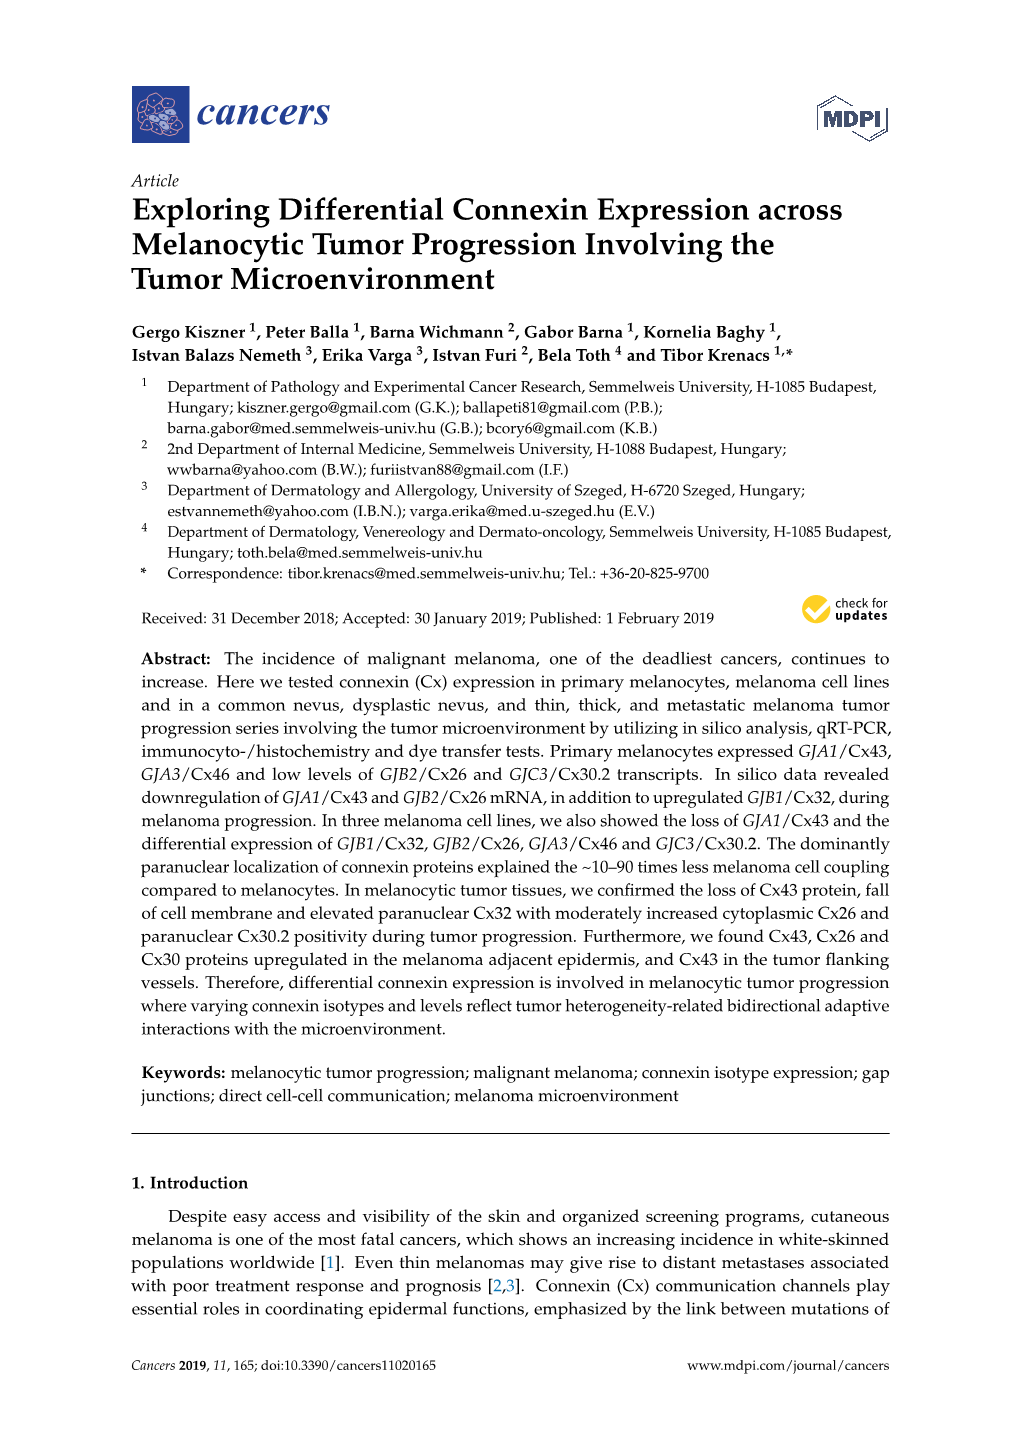 Exploring Differential Connexin Expression Across Melanocytic Tumor Progression Involving the Tumor Microenvironment